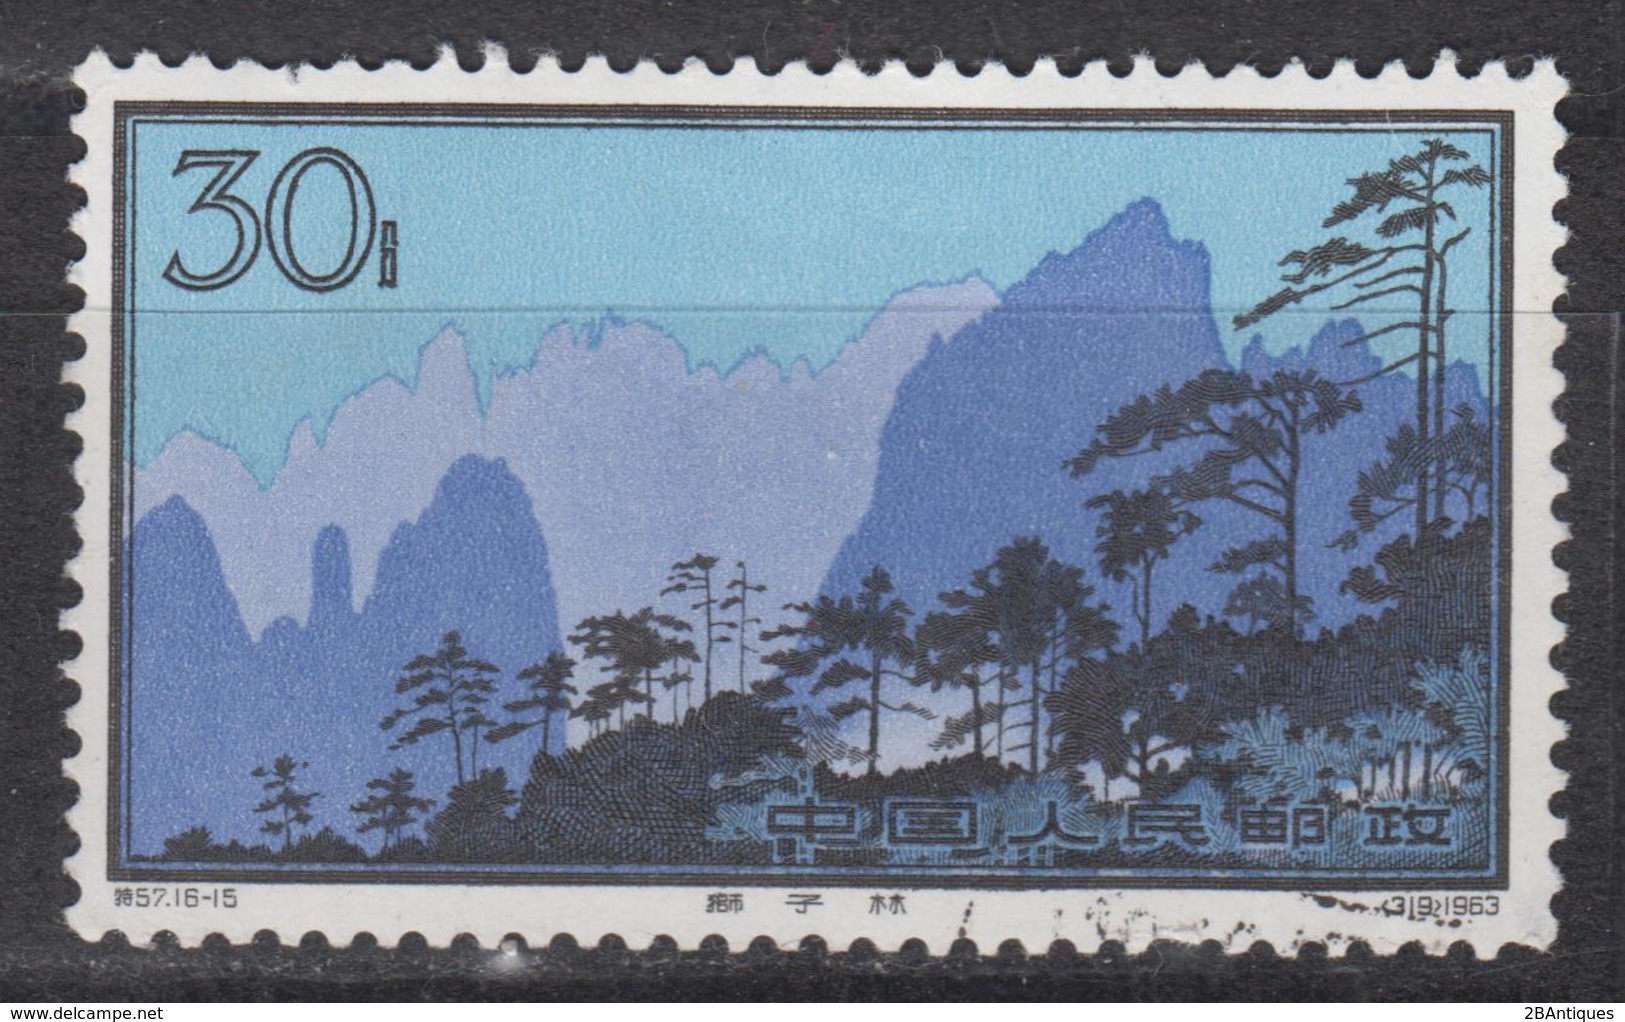 PR CHINA 1963 - 30分 Hwangshan Landscapes 中國郵票1963年30分黃山風景區 CTO - Used Stamps